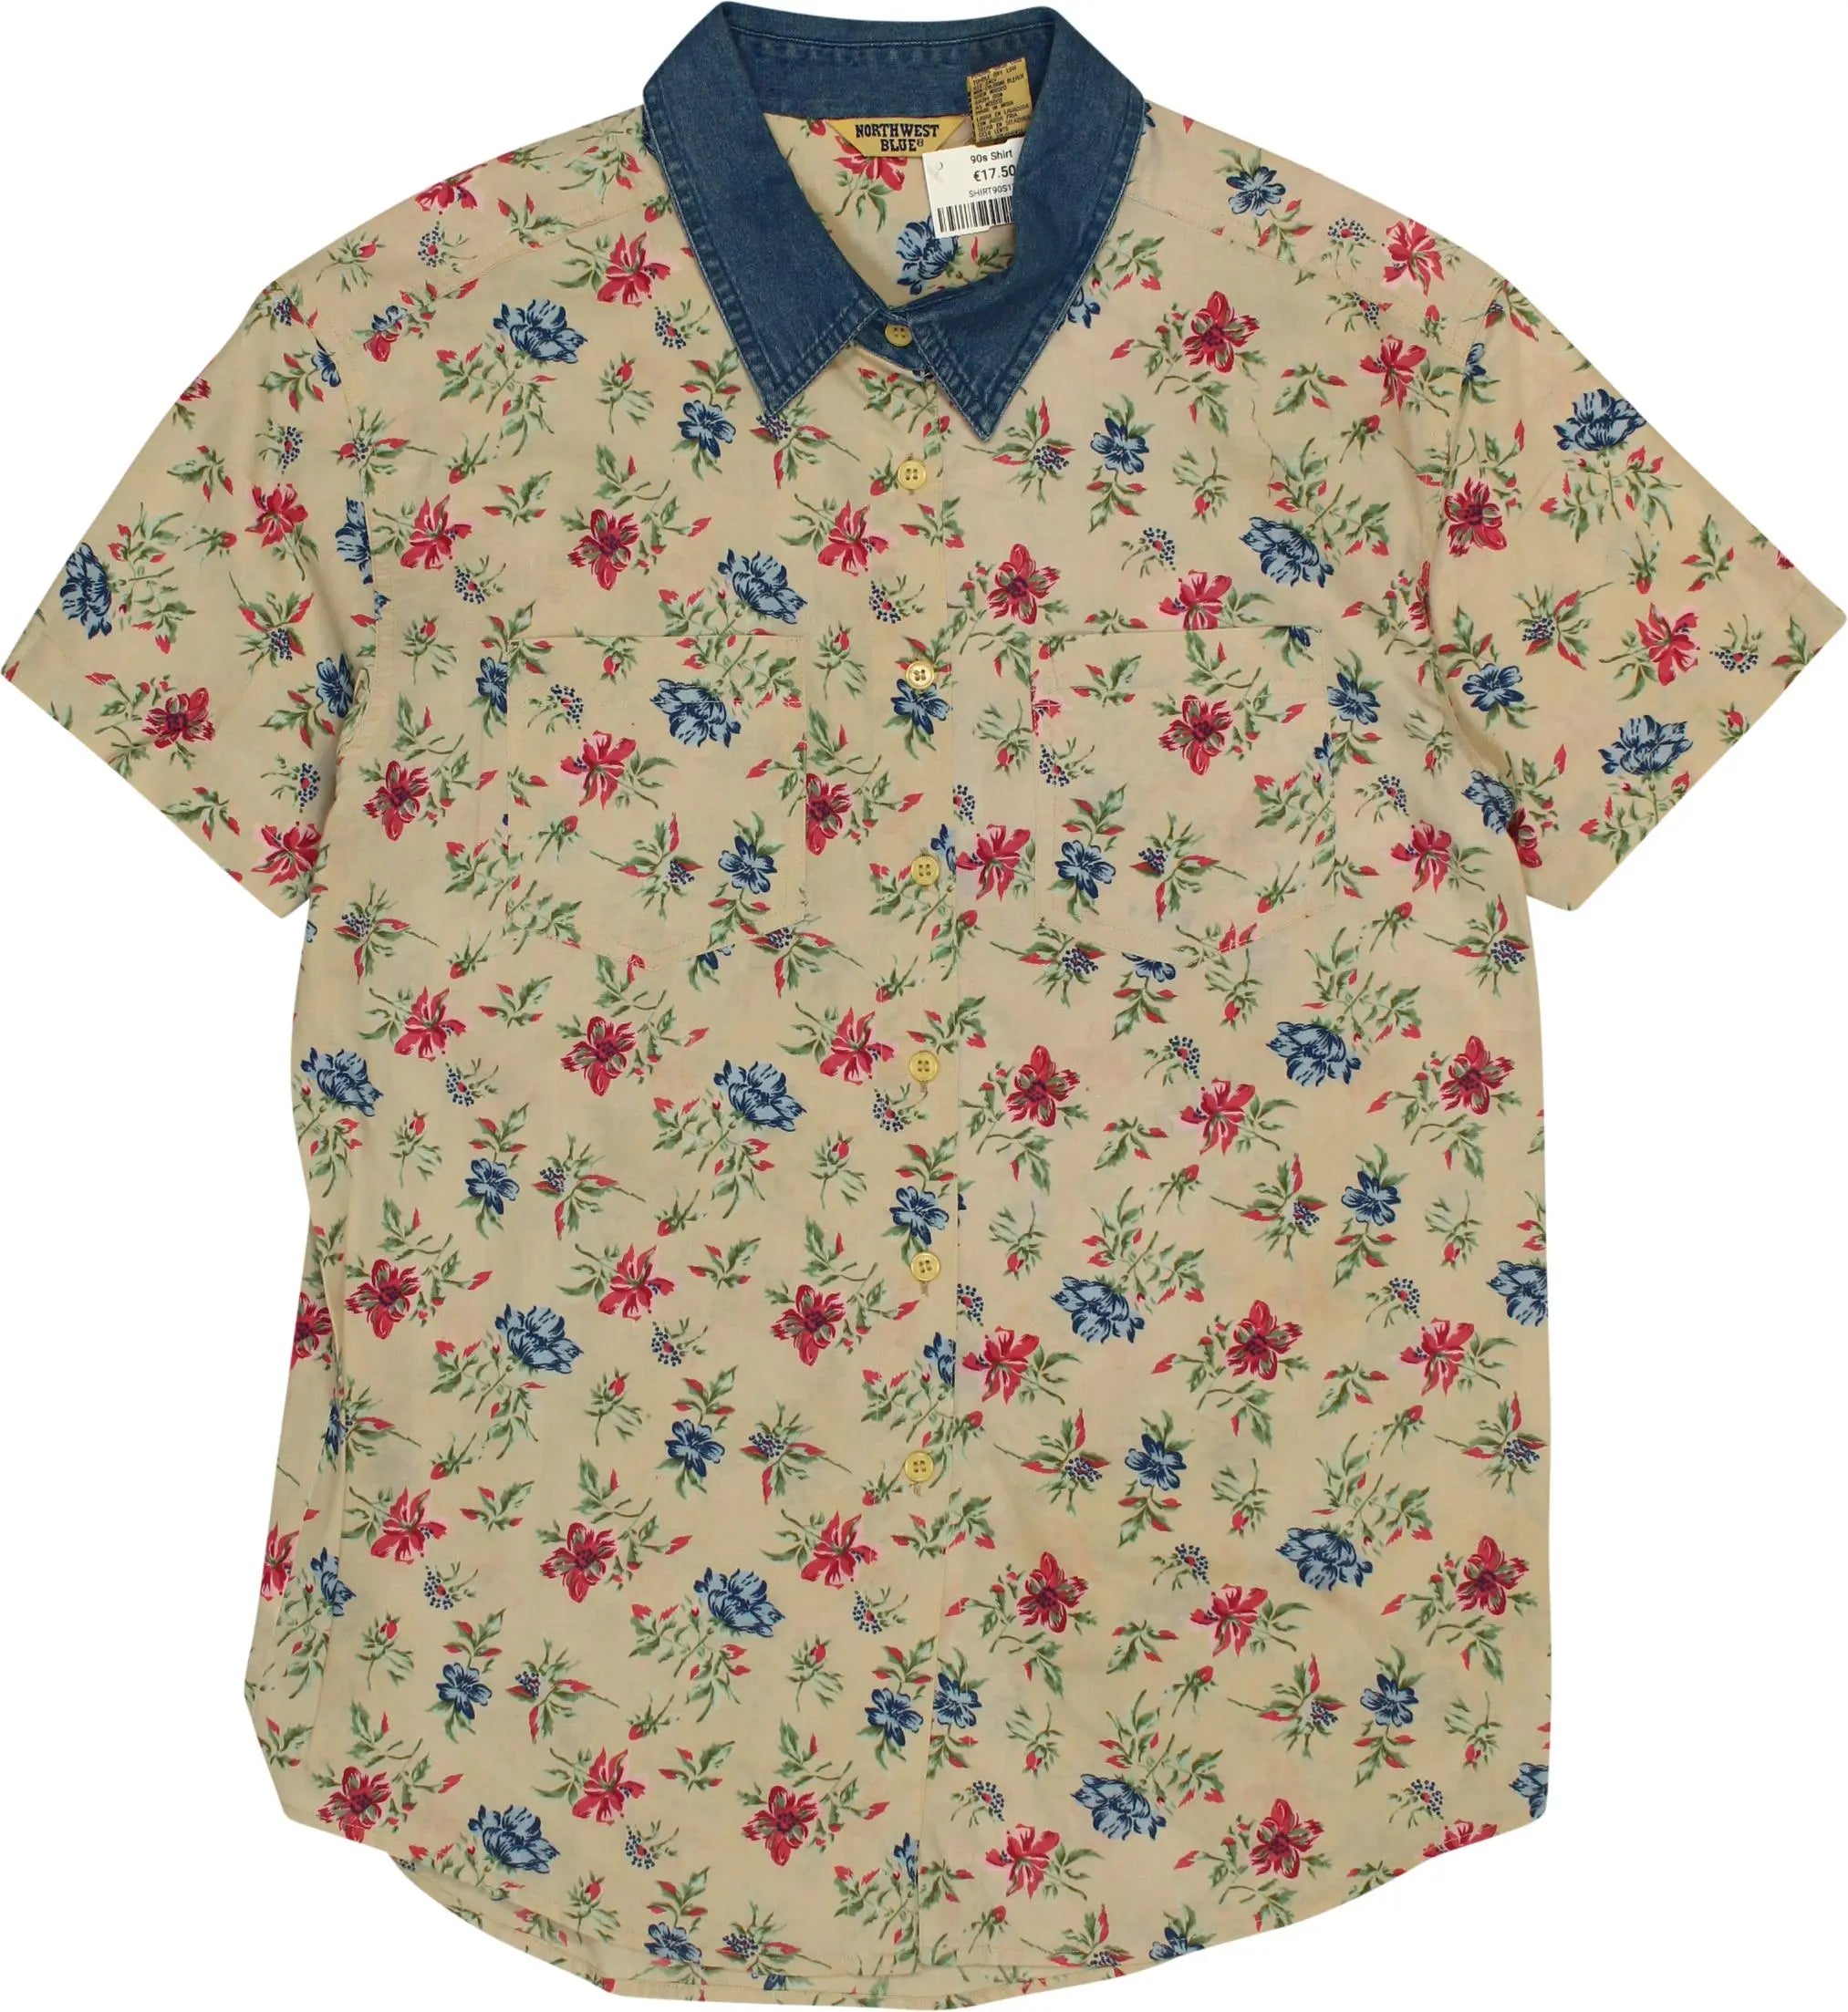 Northwest Blue - Floral Shirt- ThriftTale.com - Vintage and second handclothing